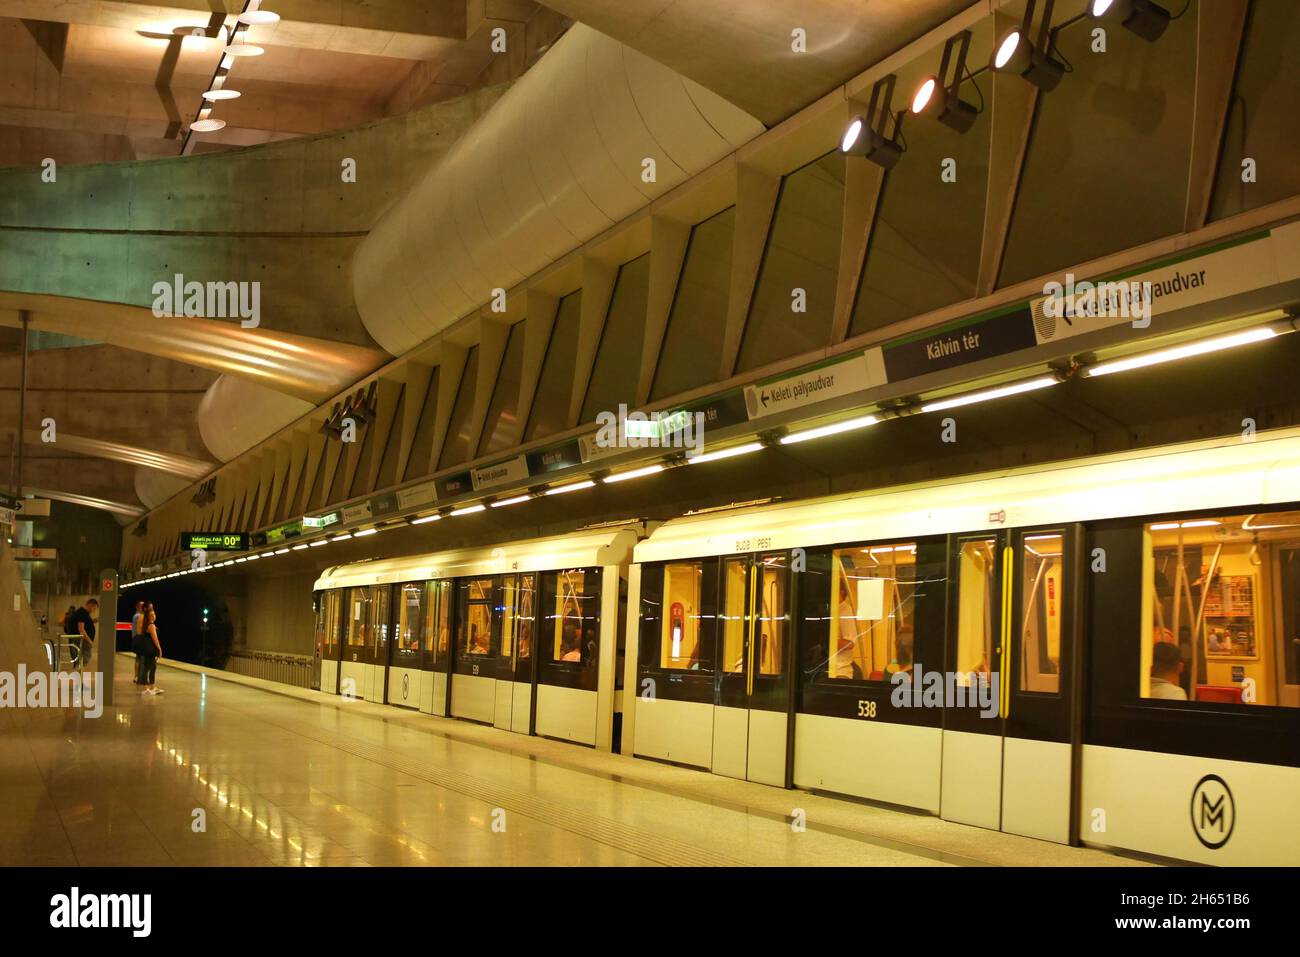 Kalvin ter metro station on the new metro line 4, Budapest, Hungary Stock Photo